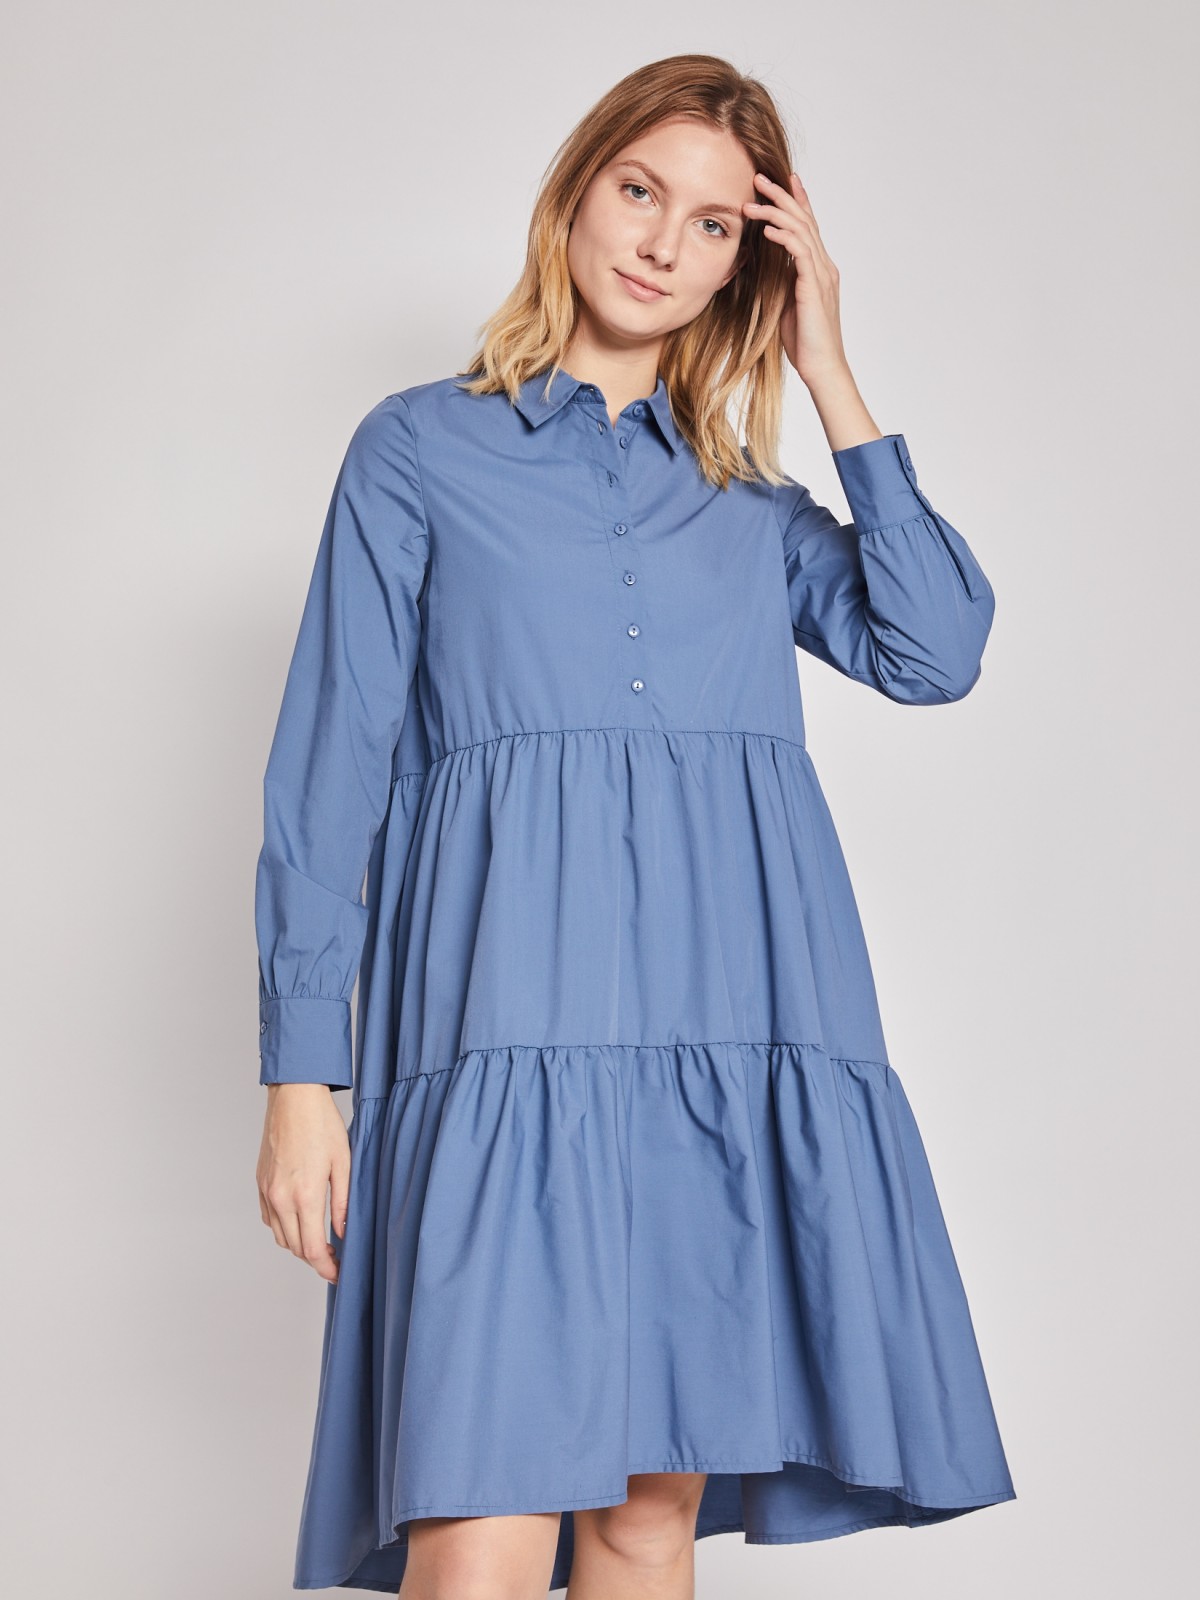 Ярусное платье-рубашка zolla 022138291223, цвет голубой, размер XS - фото 4